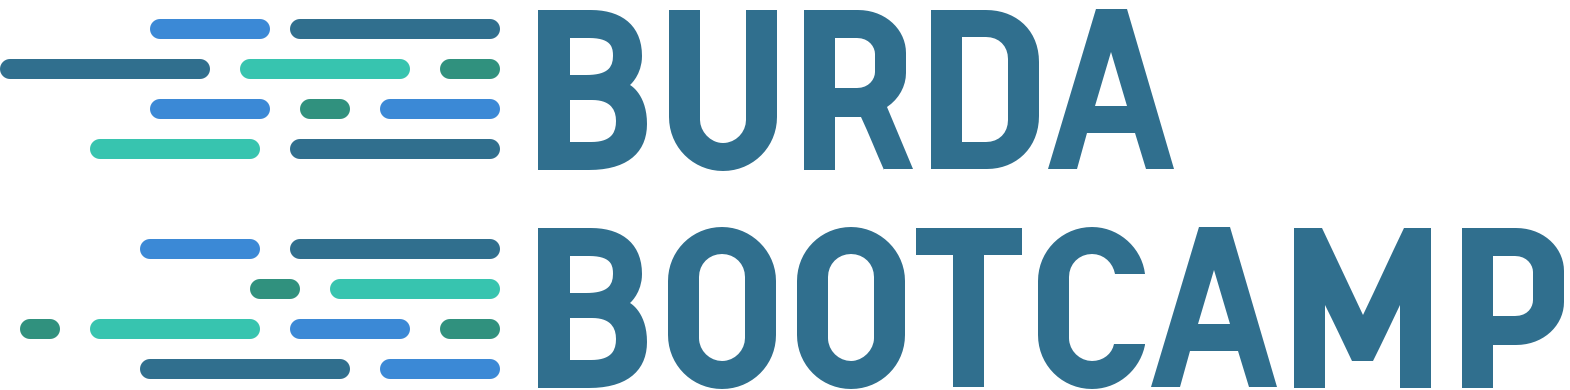 Burda Bootcamp